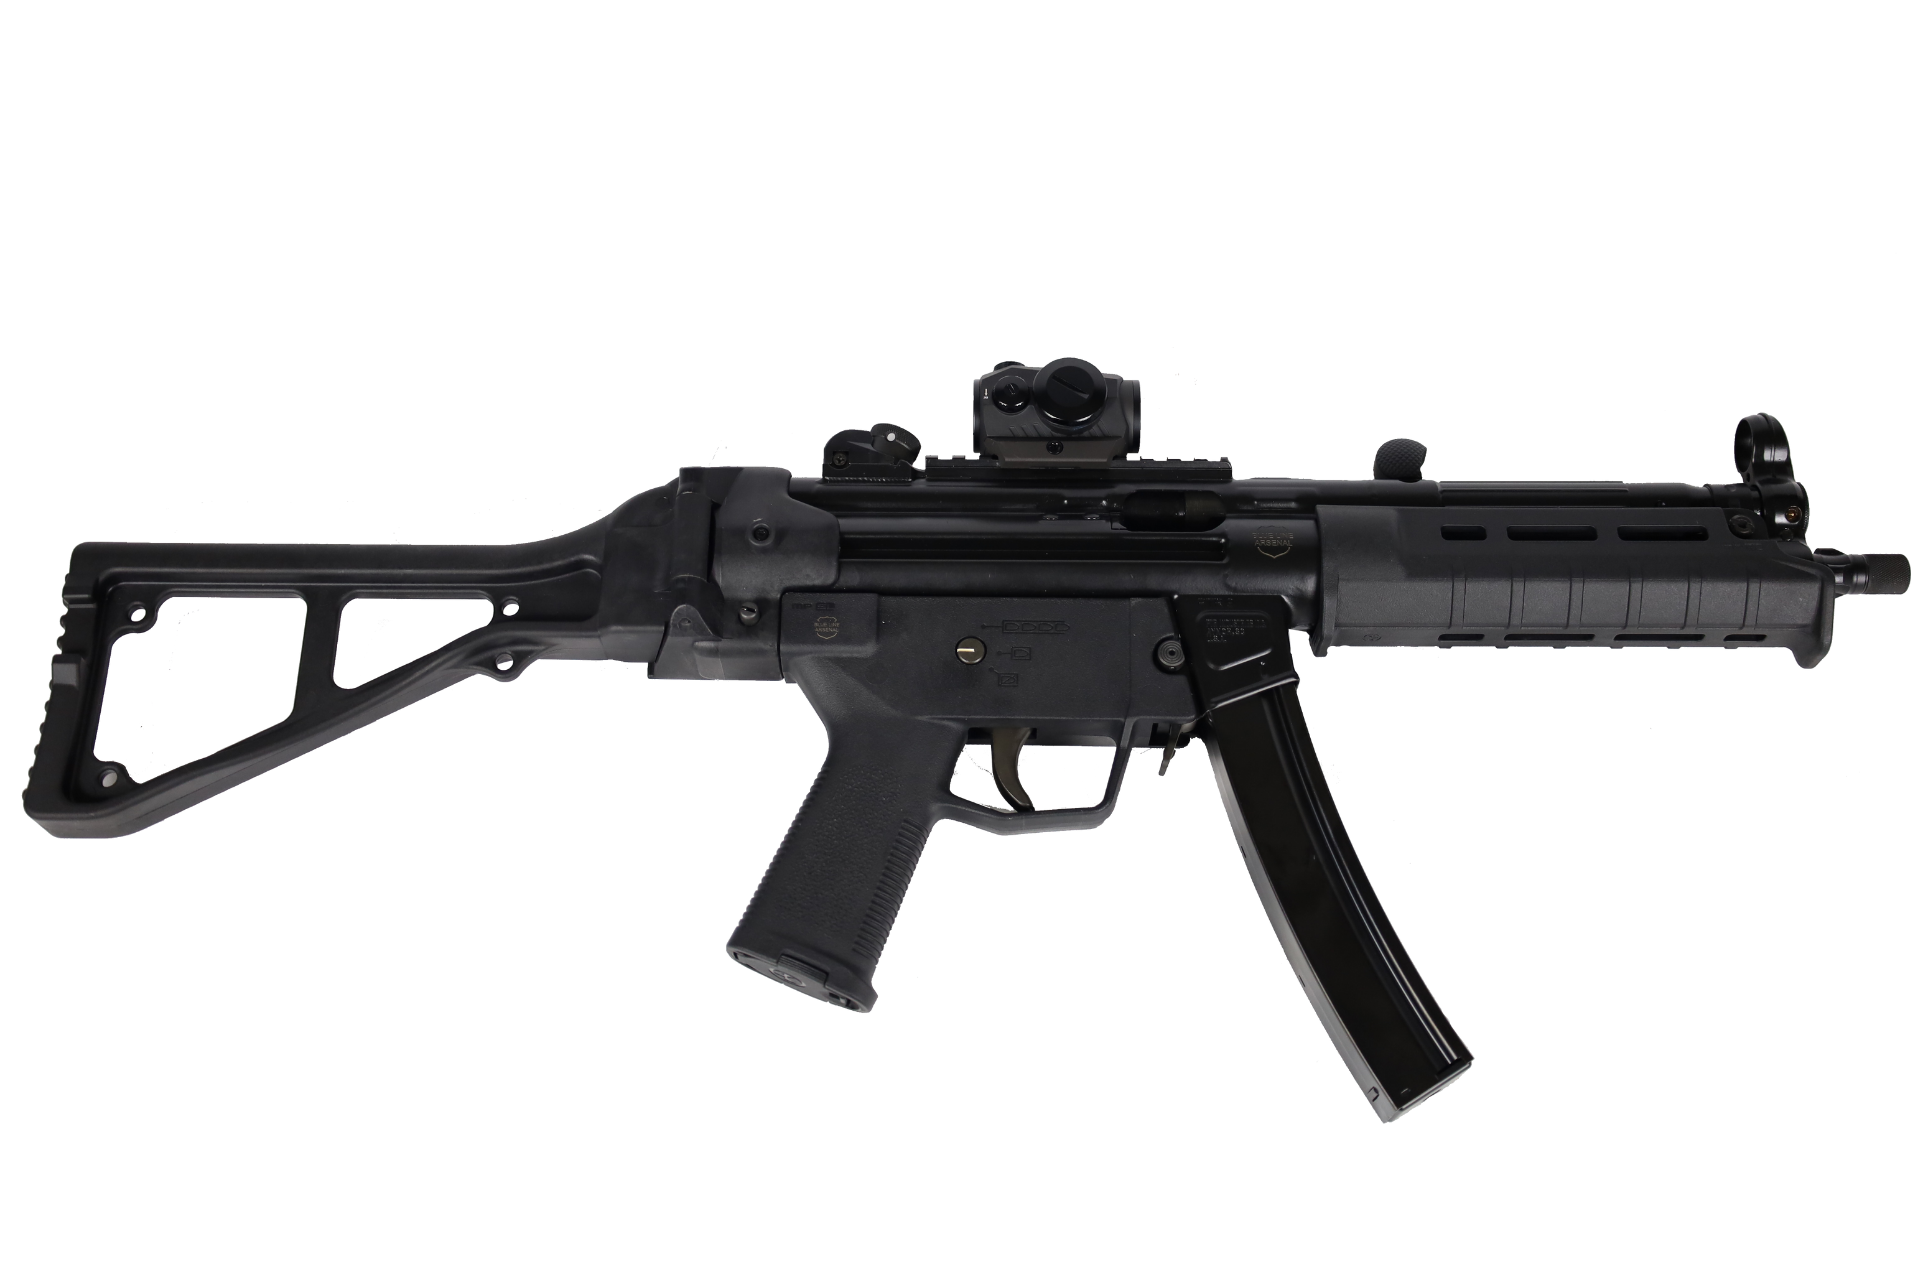 MP5 Clone PTR 9mm Machine Gun 8.5" Barrel select fire Semi and full Auto LE only